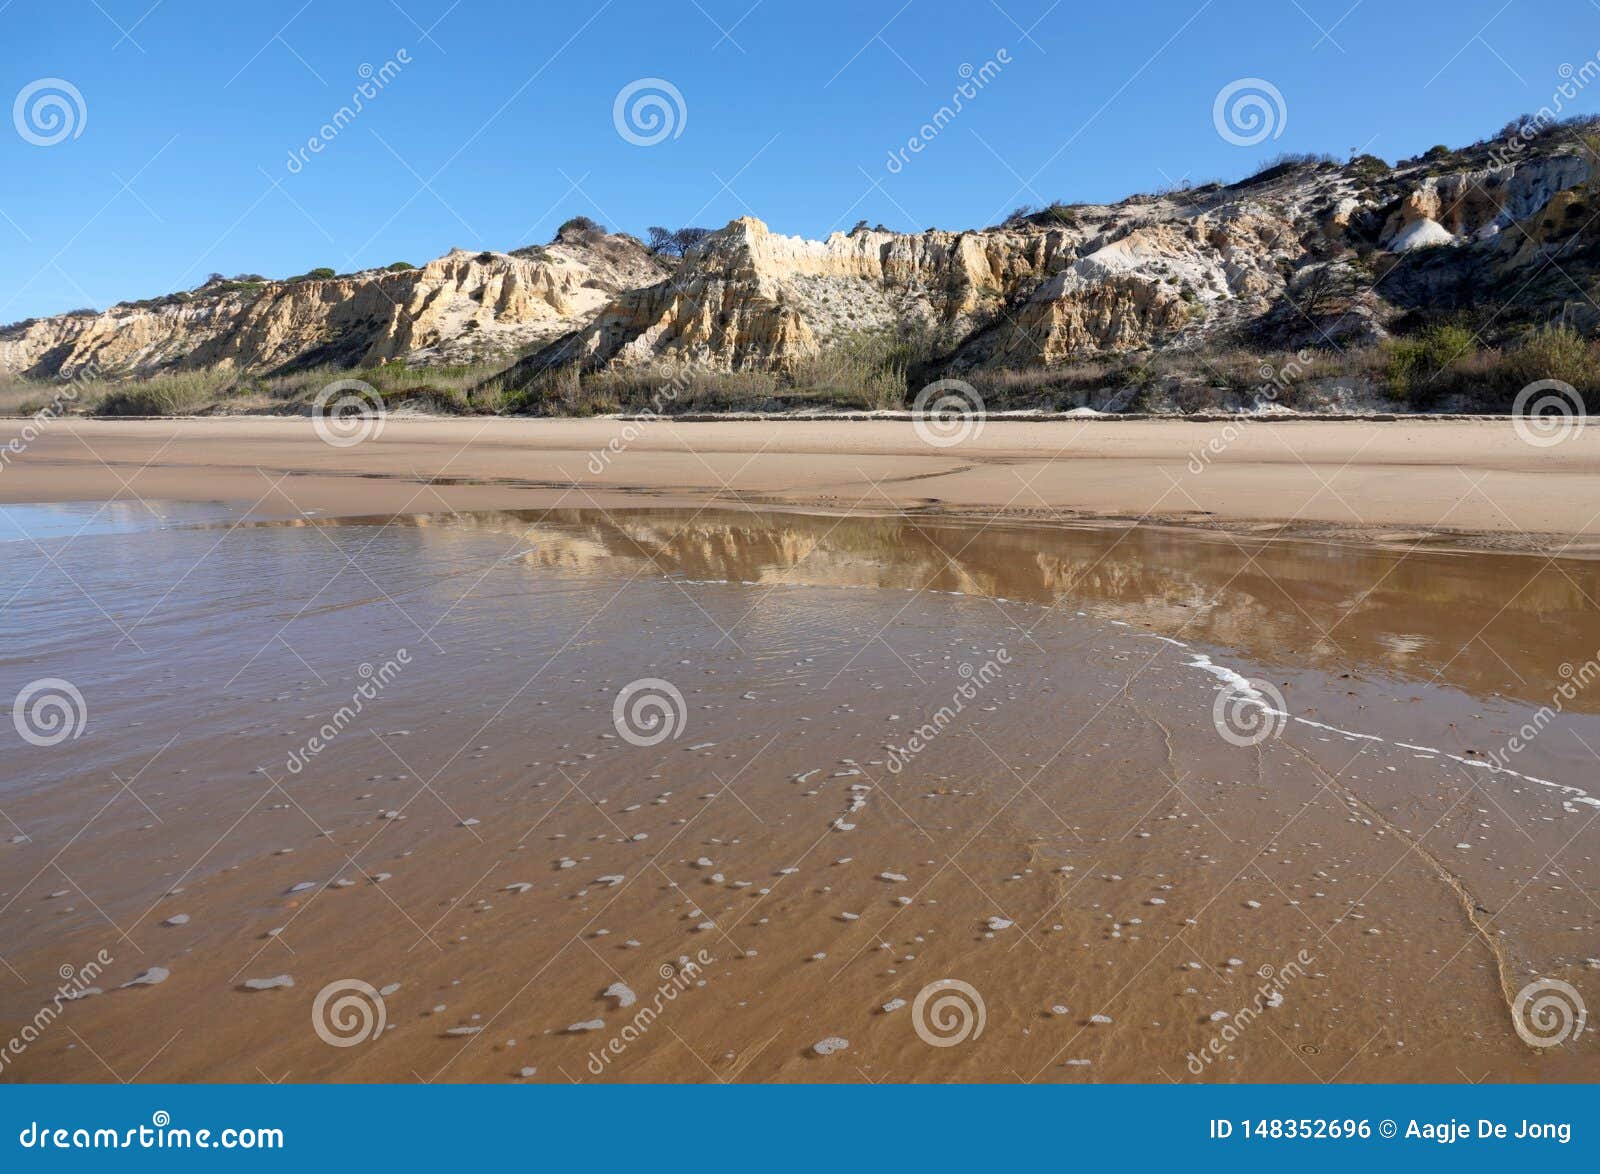 colourful dunes of playa de rompeculos beach in mazagon, spain